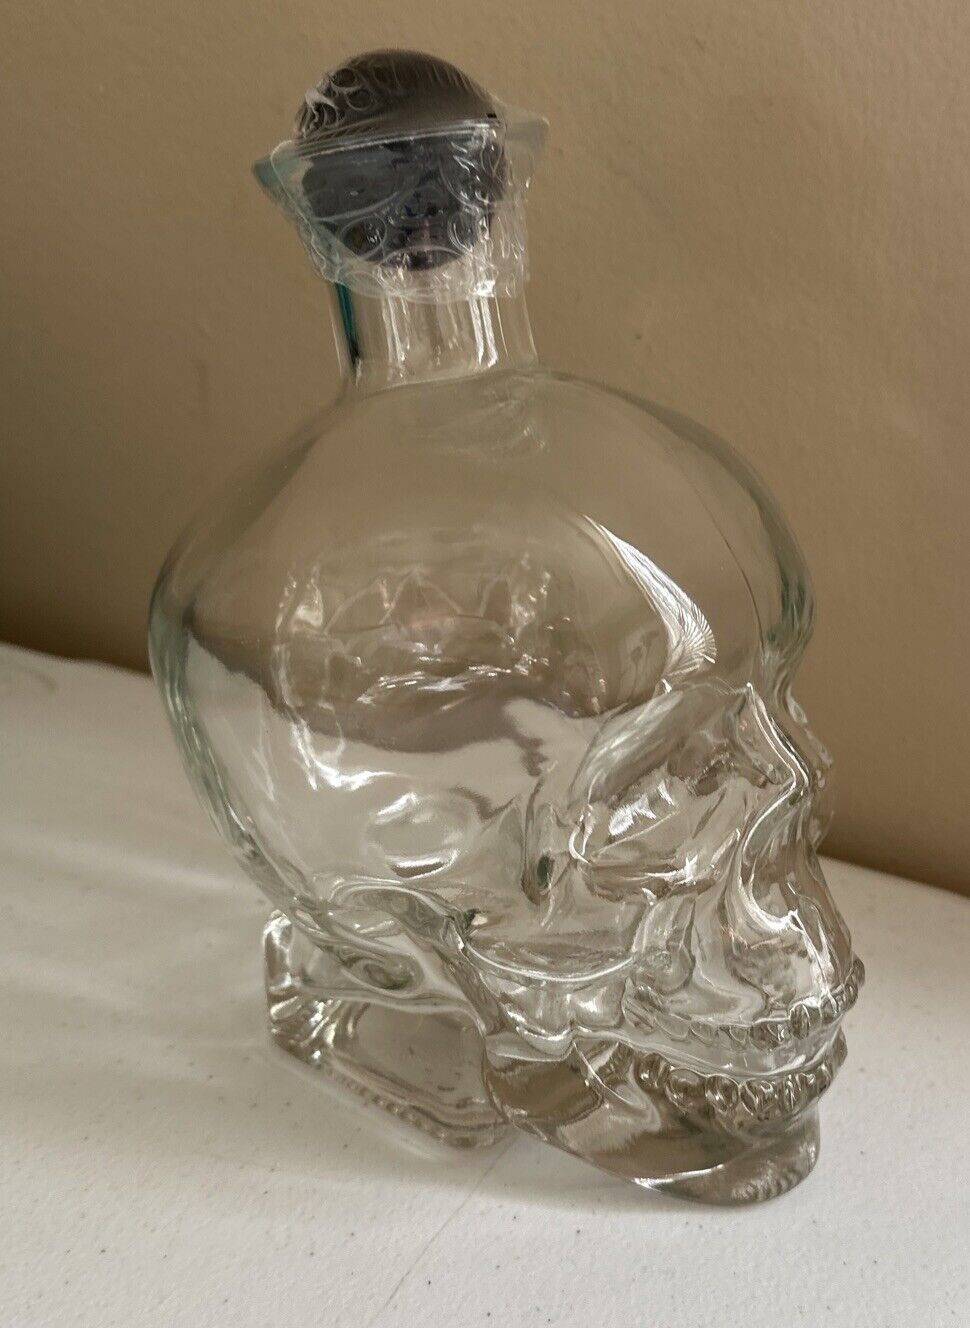 🎃 Halloween Sankara Clear Glass💀Skull Decanter with Wood Ball Bottle Stopper.